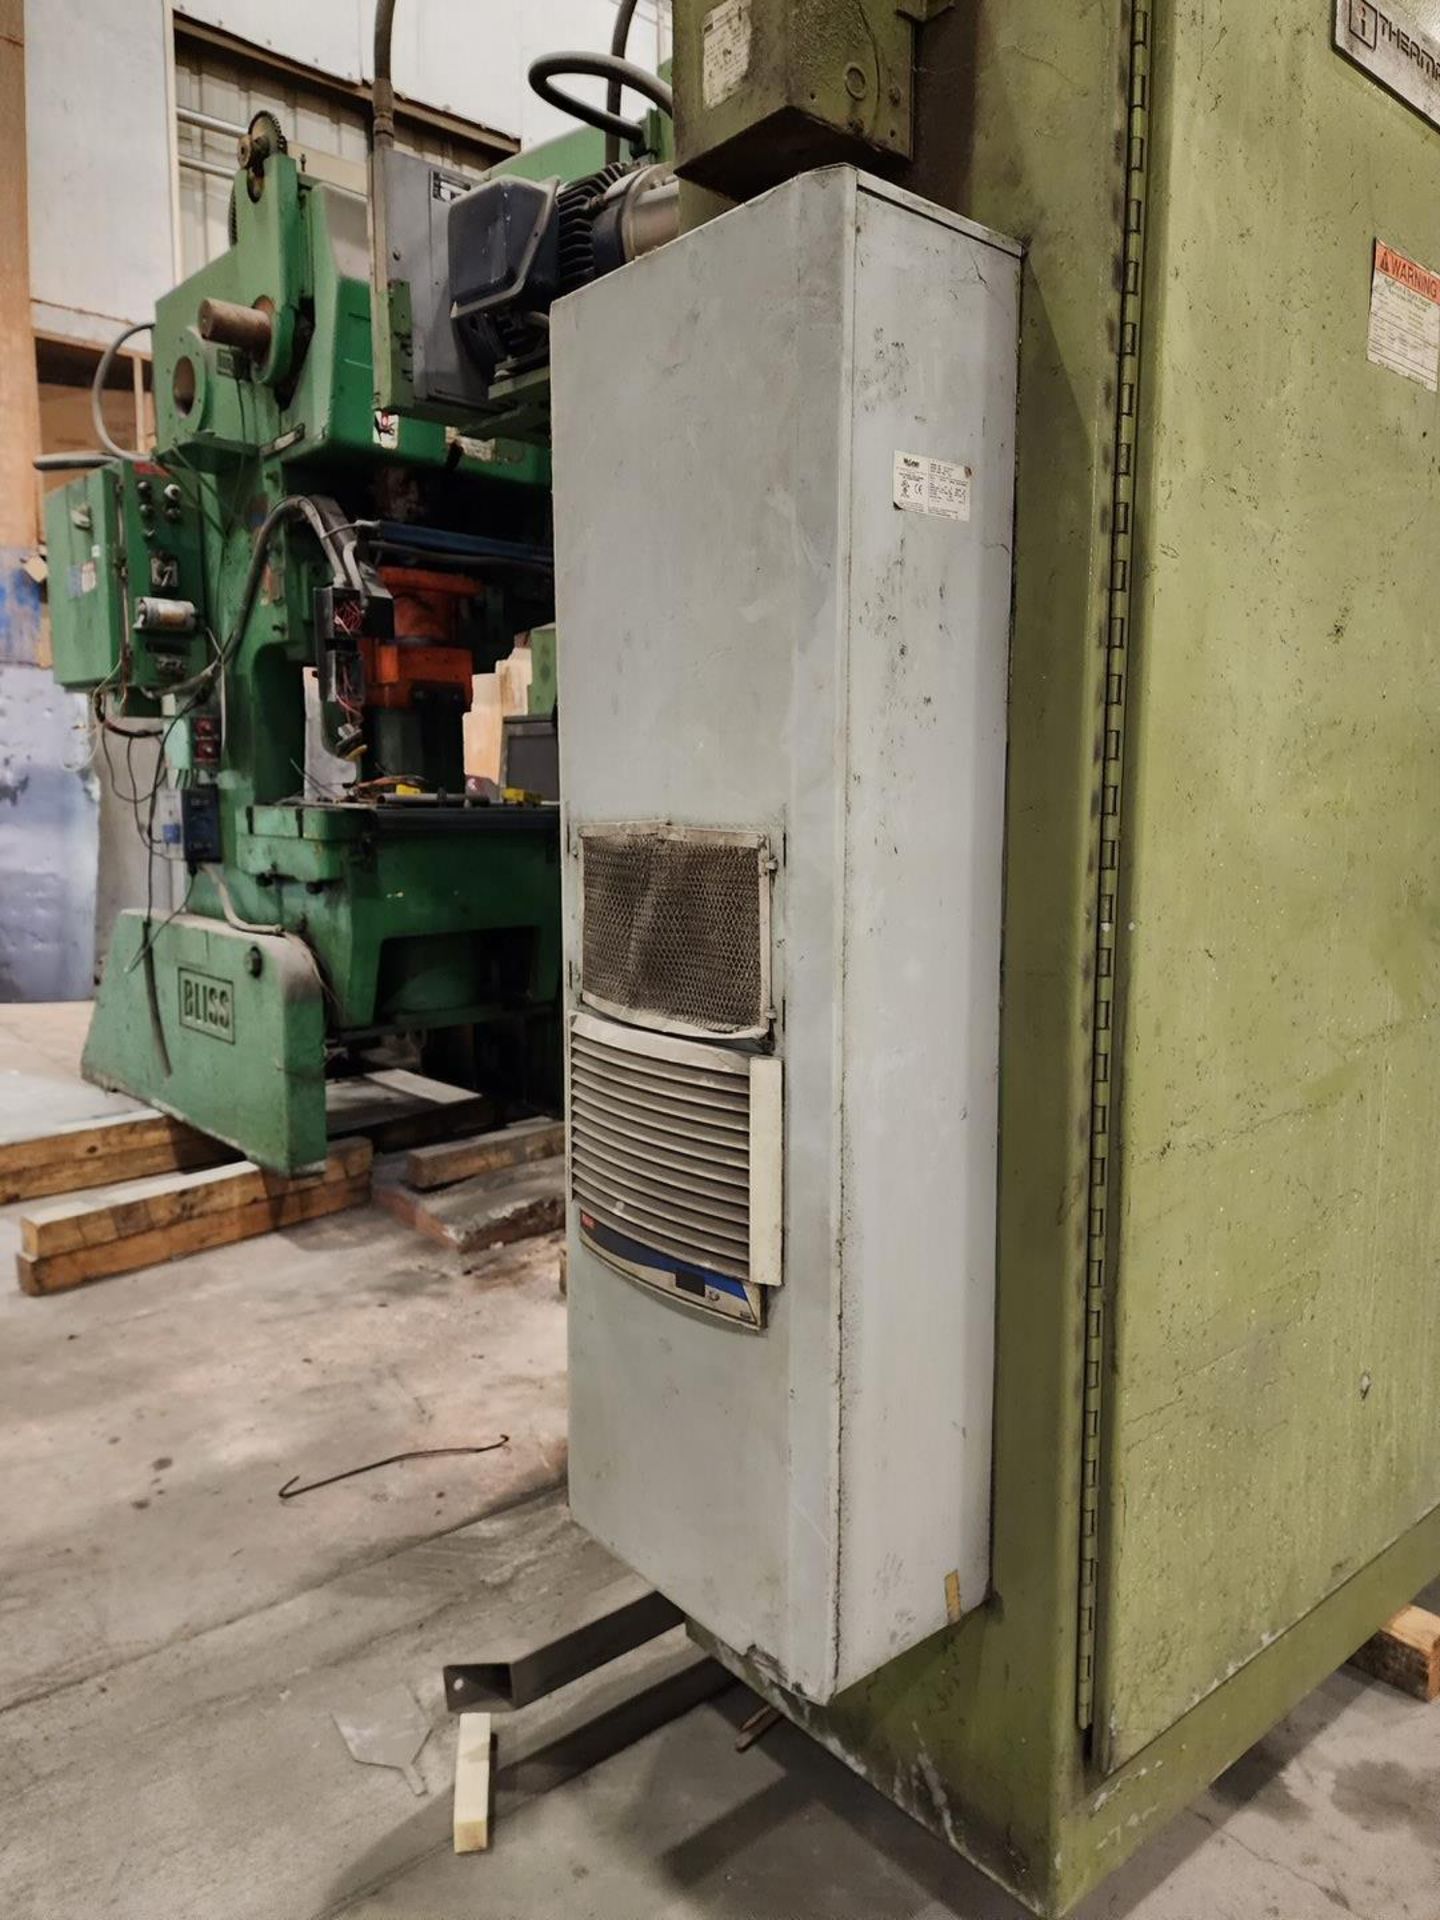 Thermatool Control Panel W/ McLean Ele Enclosure Air Conditioner, 220/230V, 50/60HZ, 1PH - Image 5 of 7